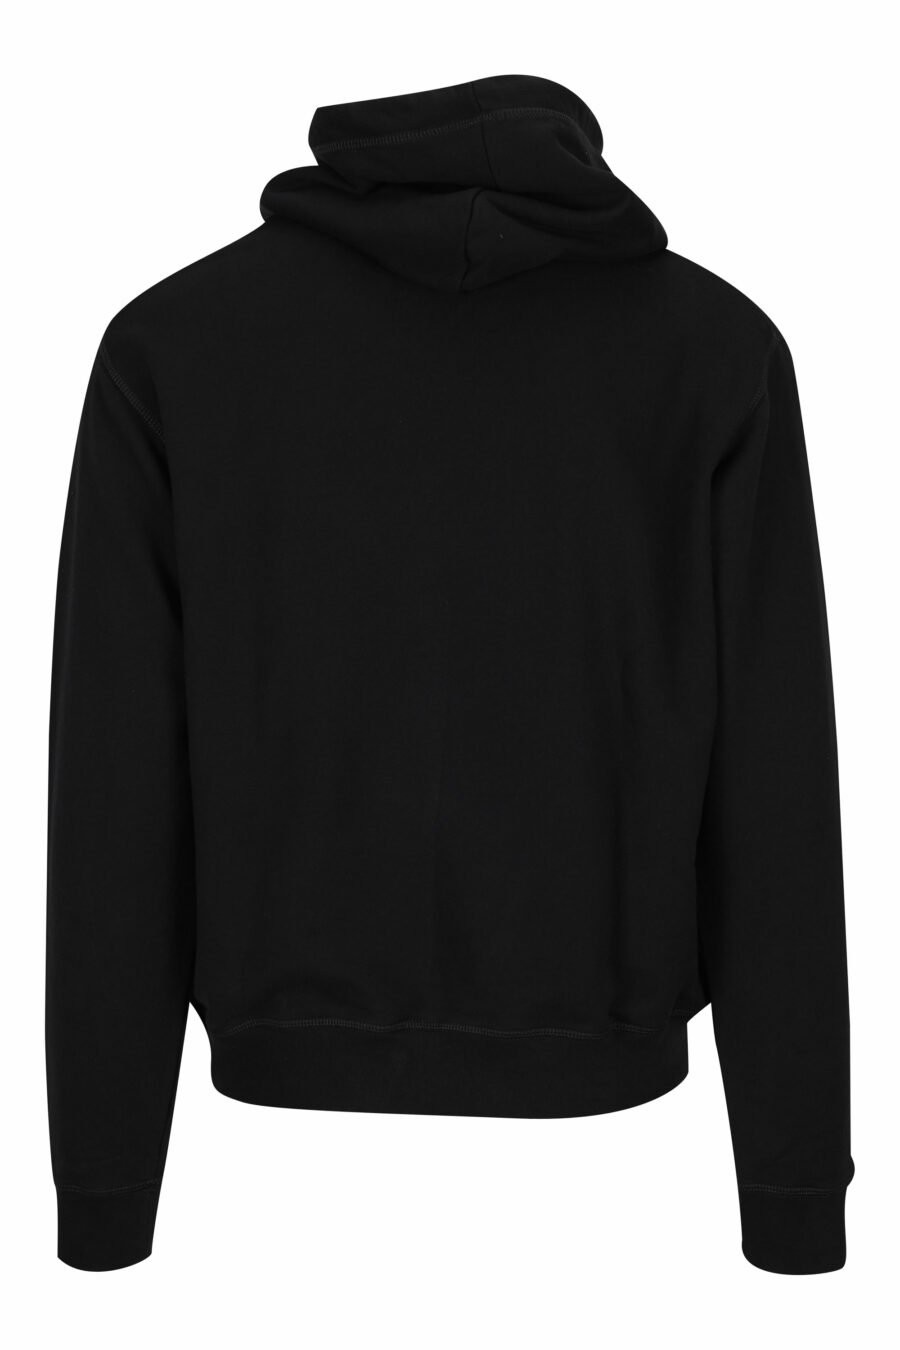 Dsquared2 - Black hooded sweatshirt with basketball dog print - BLS Fashion